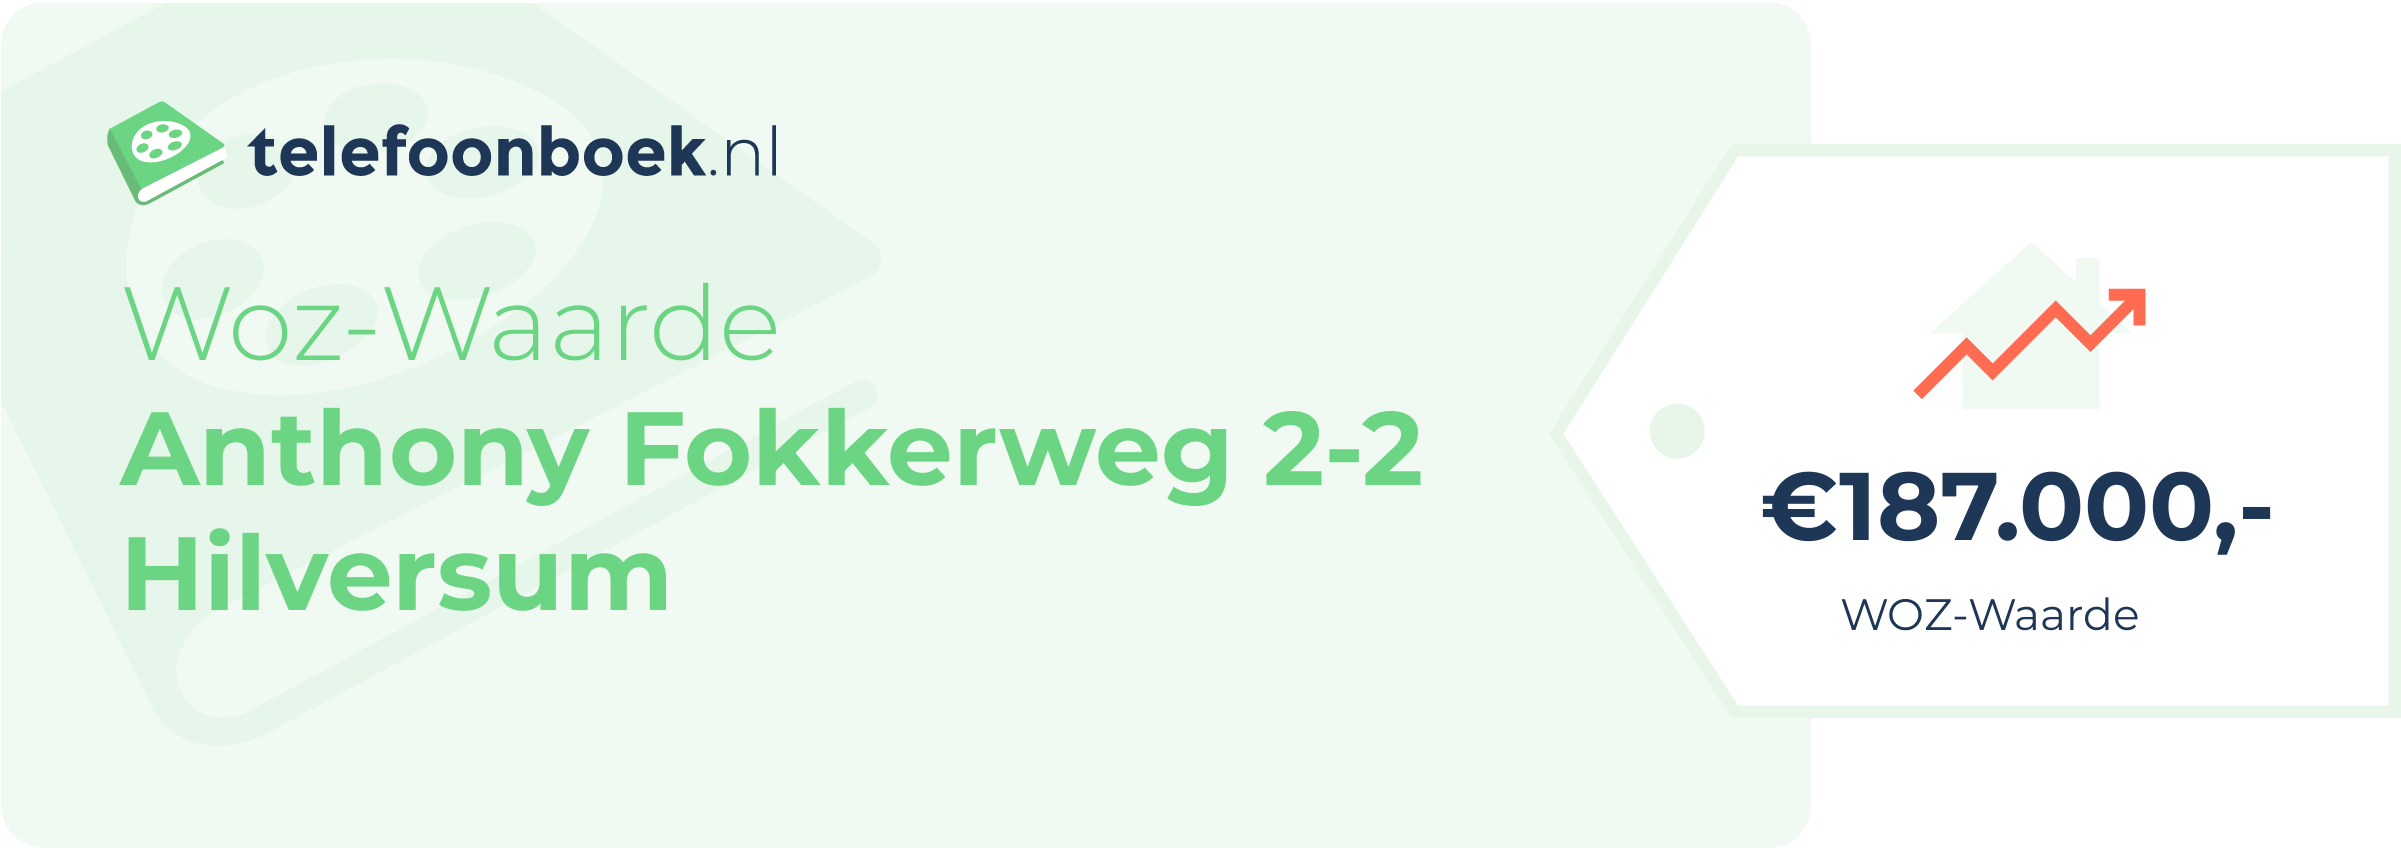 WOZ-waarde Anthony Fokkerweg 2-2 Hilversum